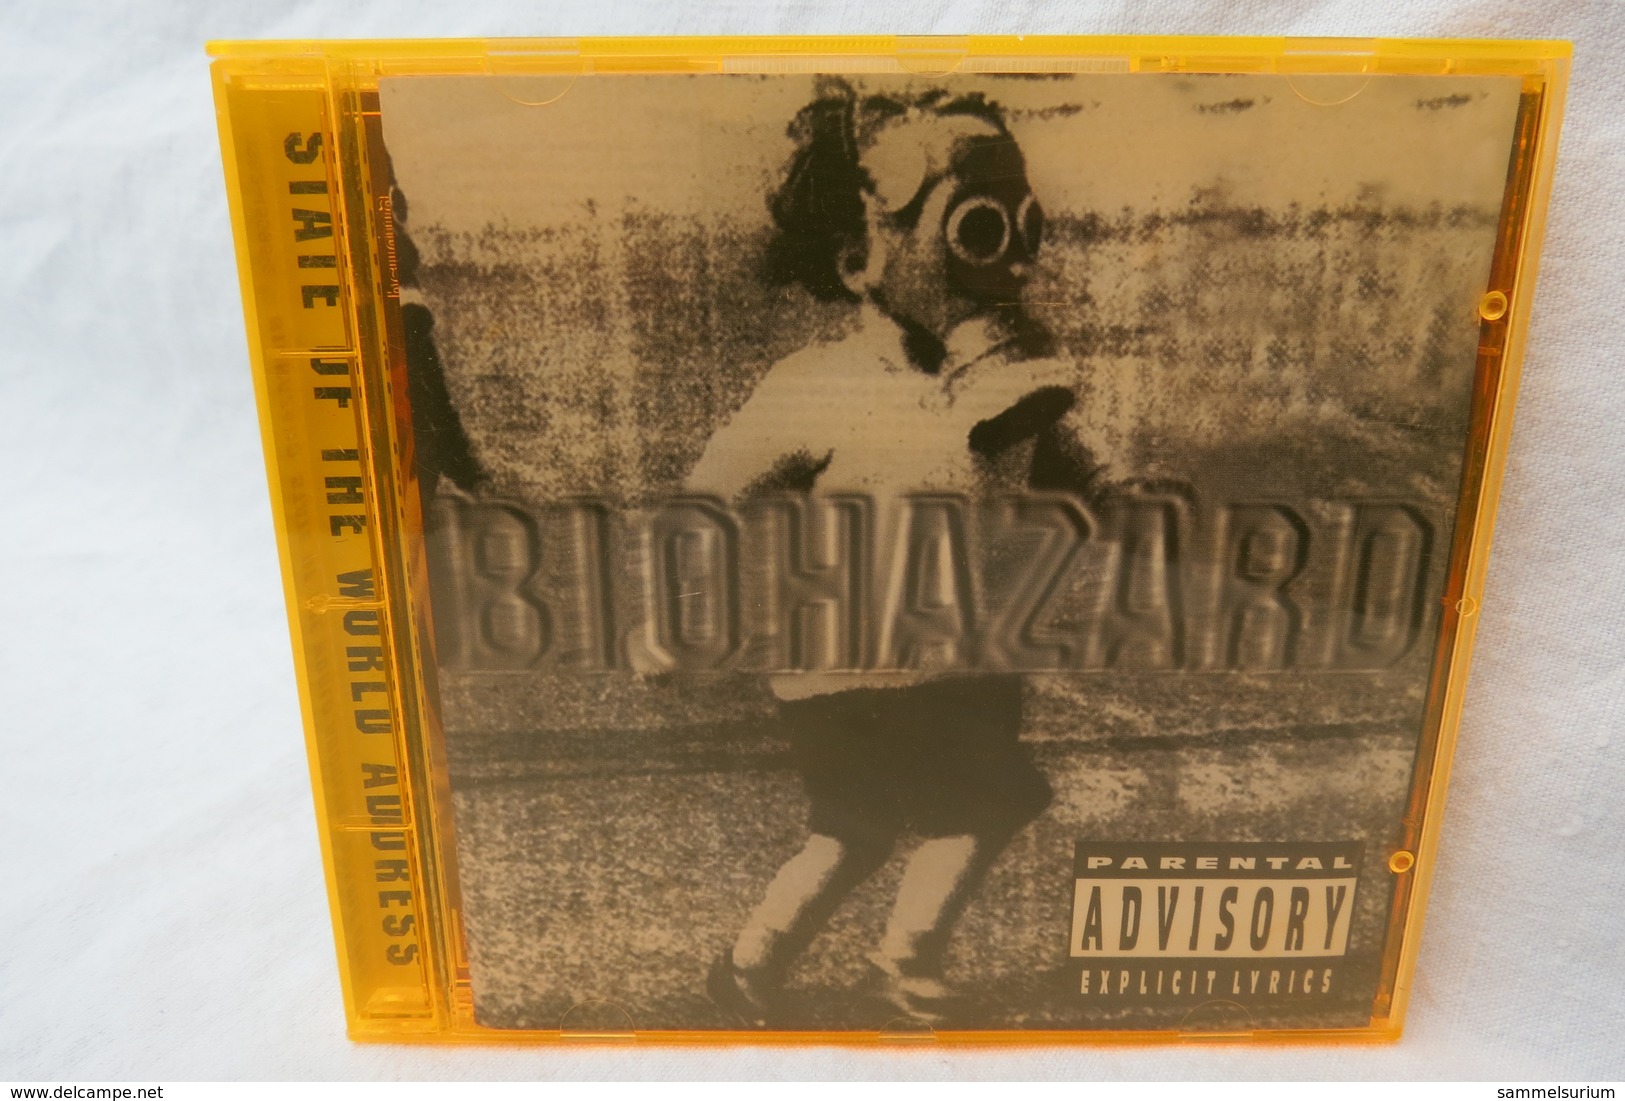 CD "Biohazard" State Of The World Address (parental Advisory Explicit Lyrics) - Edizioni Limitate